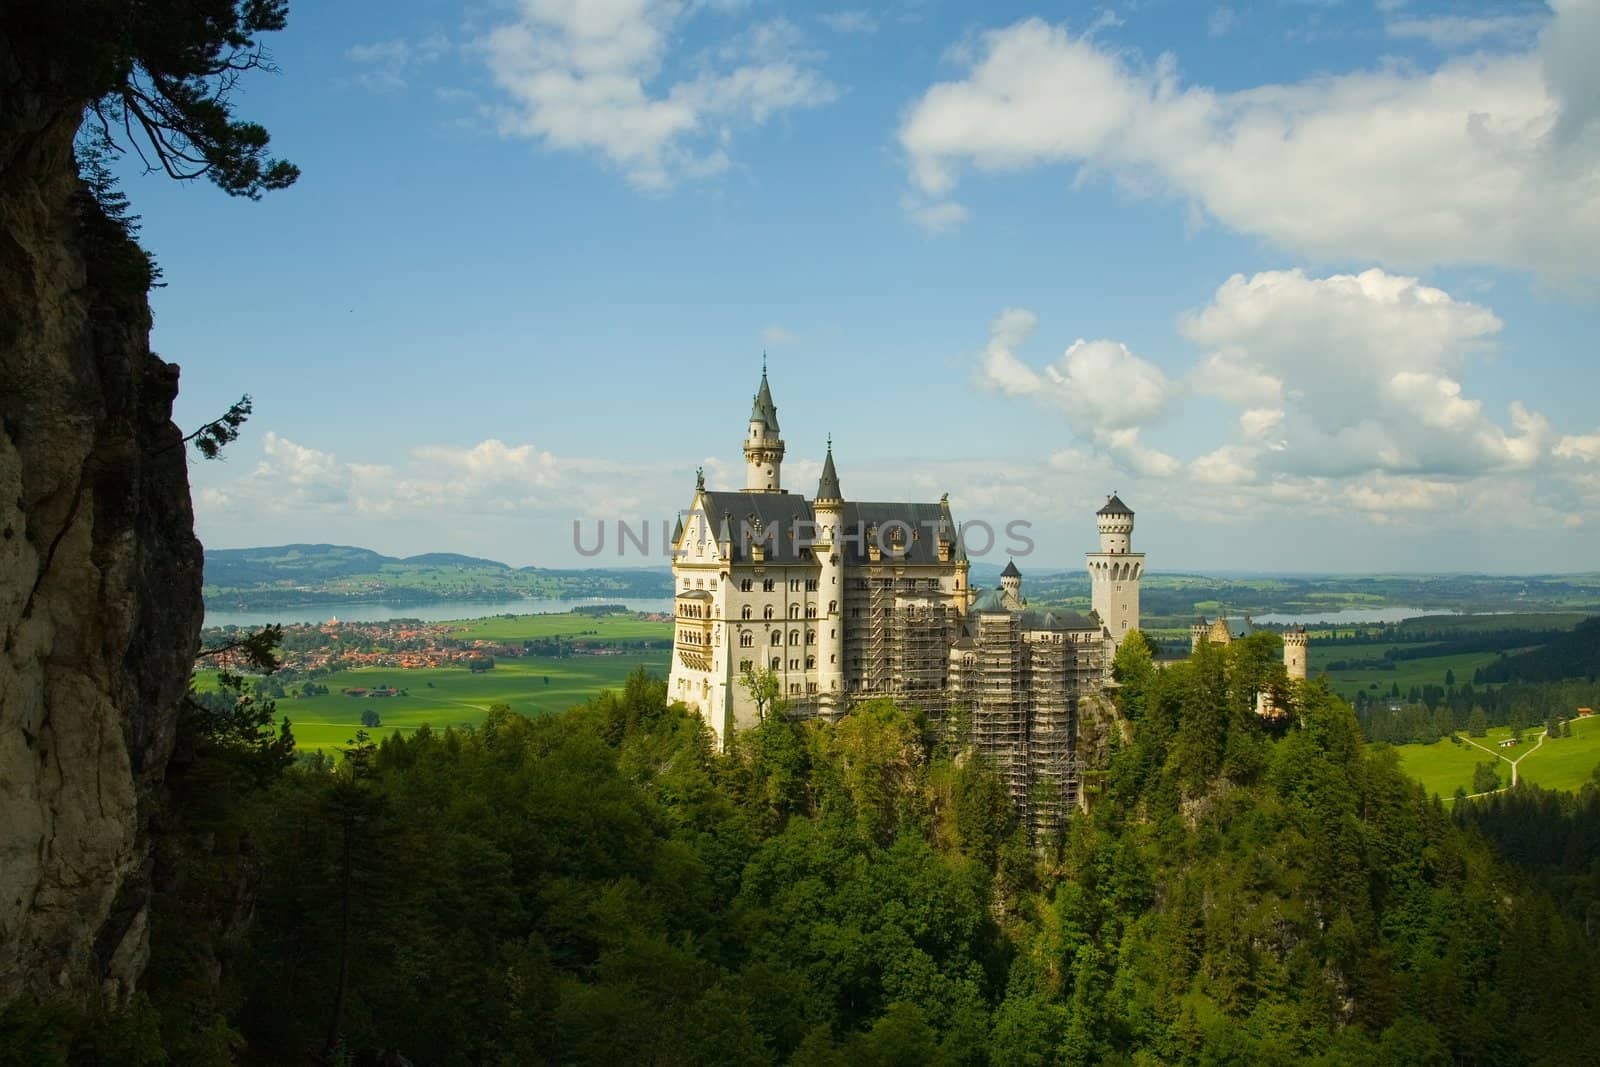 King Ludwig II's Neuschwanstein castle in Bavaria, Germany.